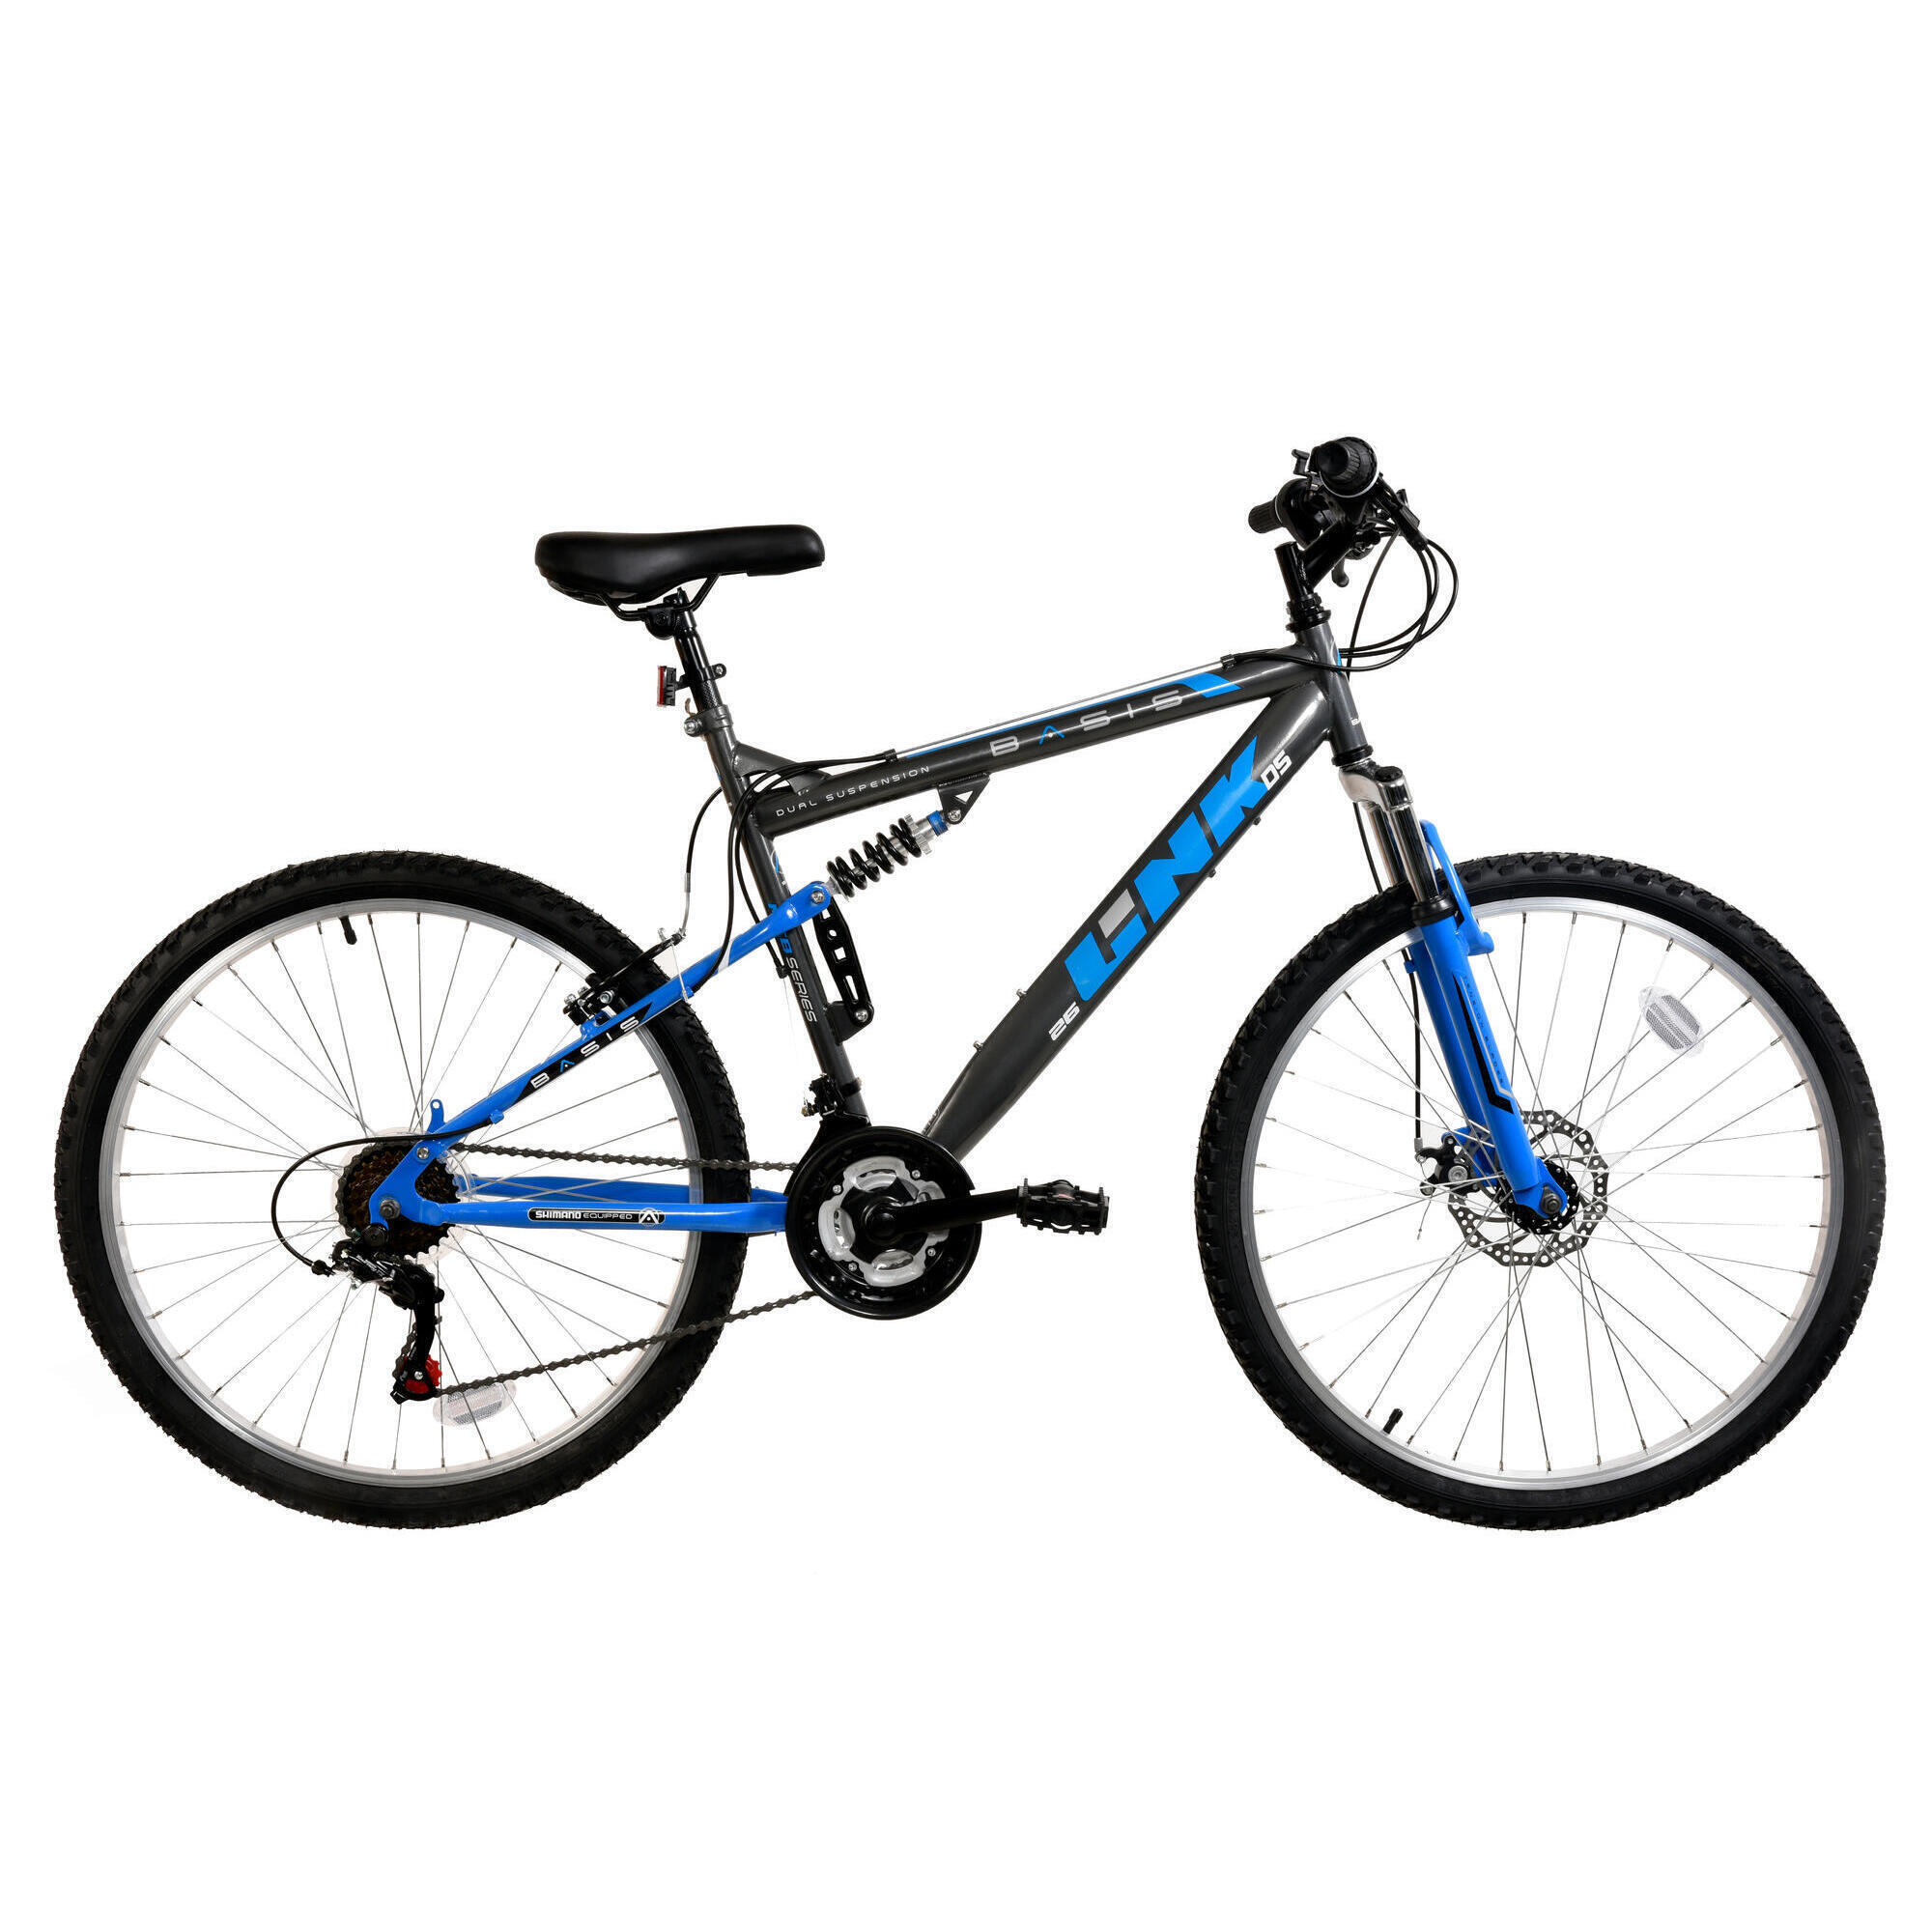 Basis Link Adult's Full Suspension Mountain Bike, 26In Wheel - Graphite/Blue 1/5